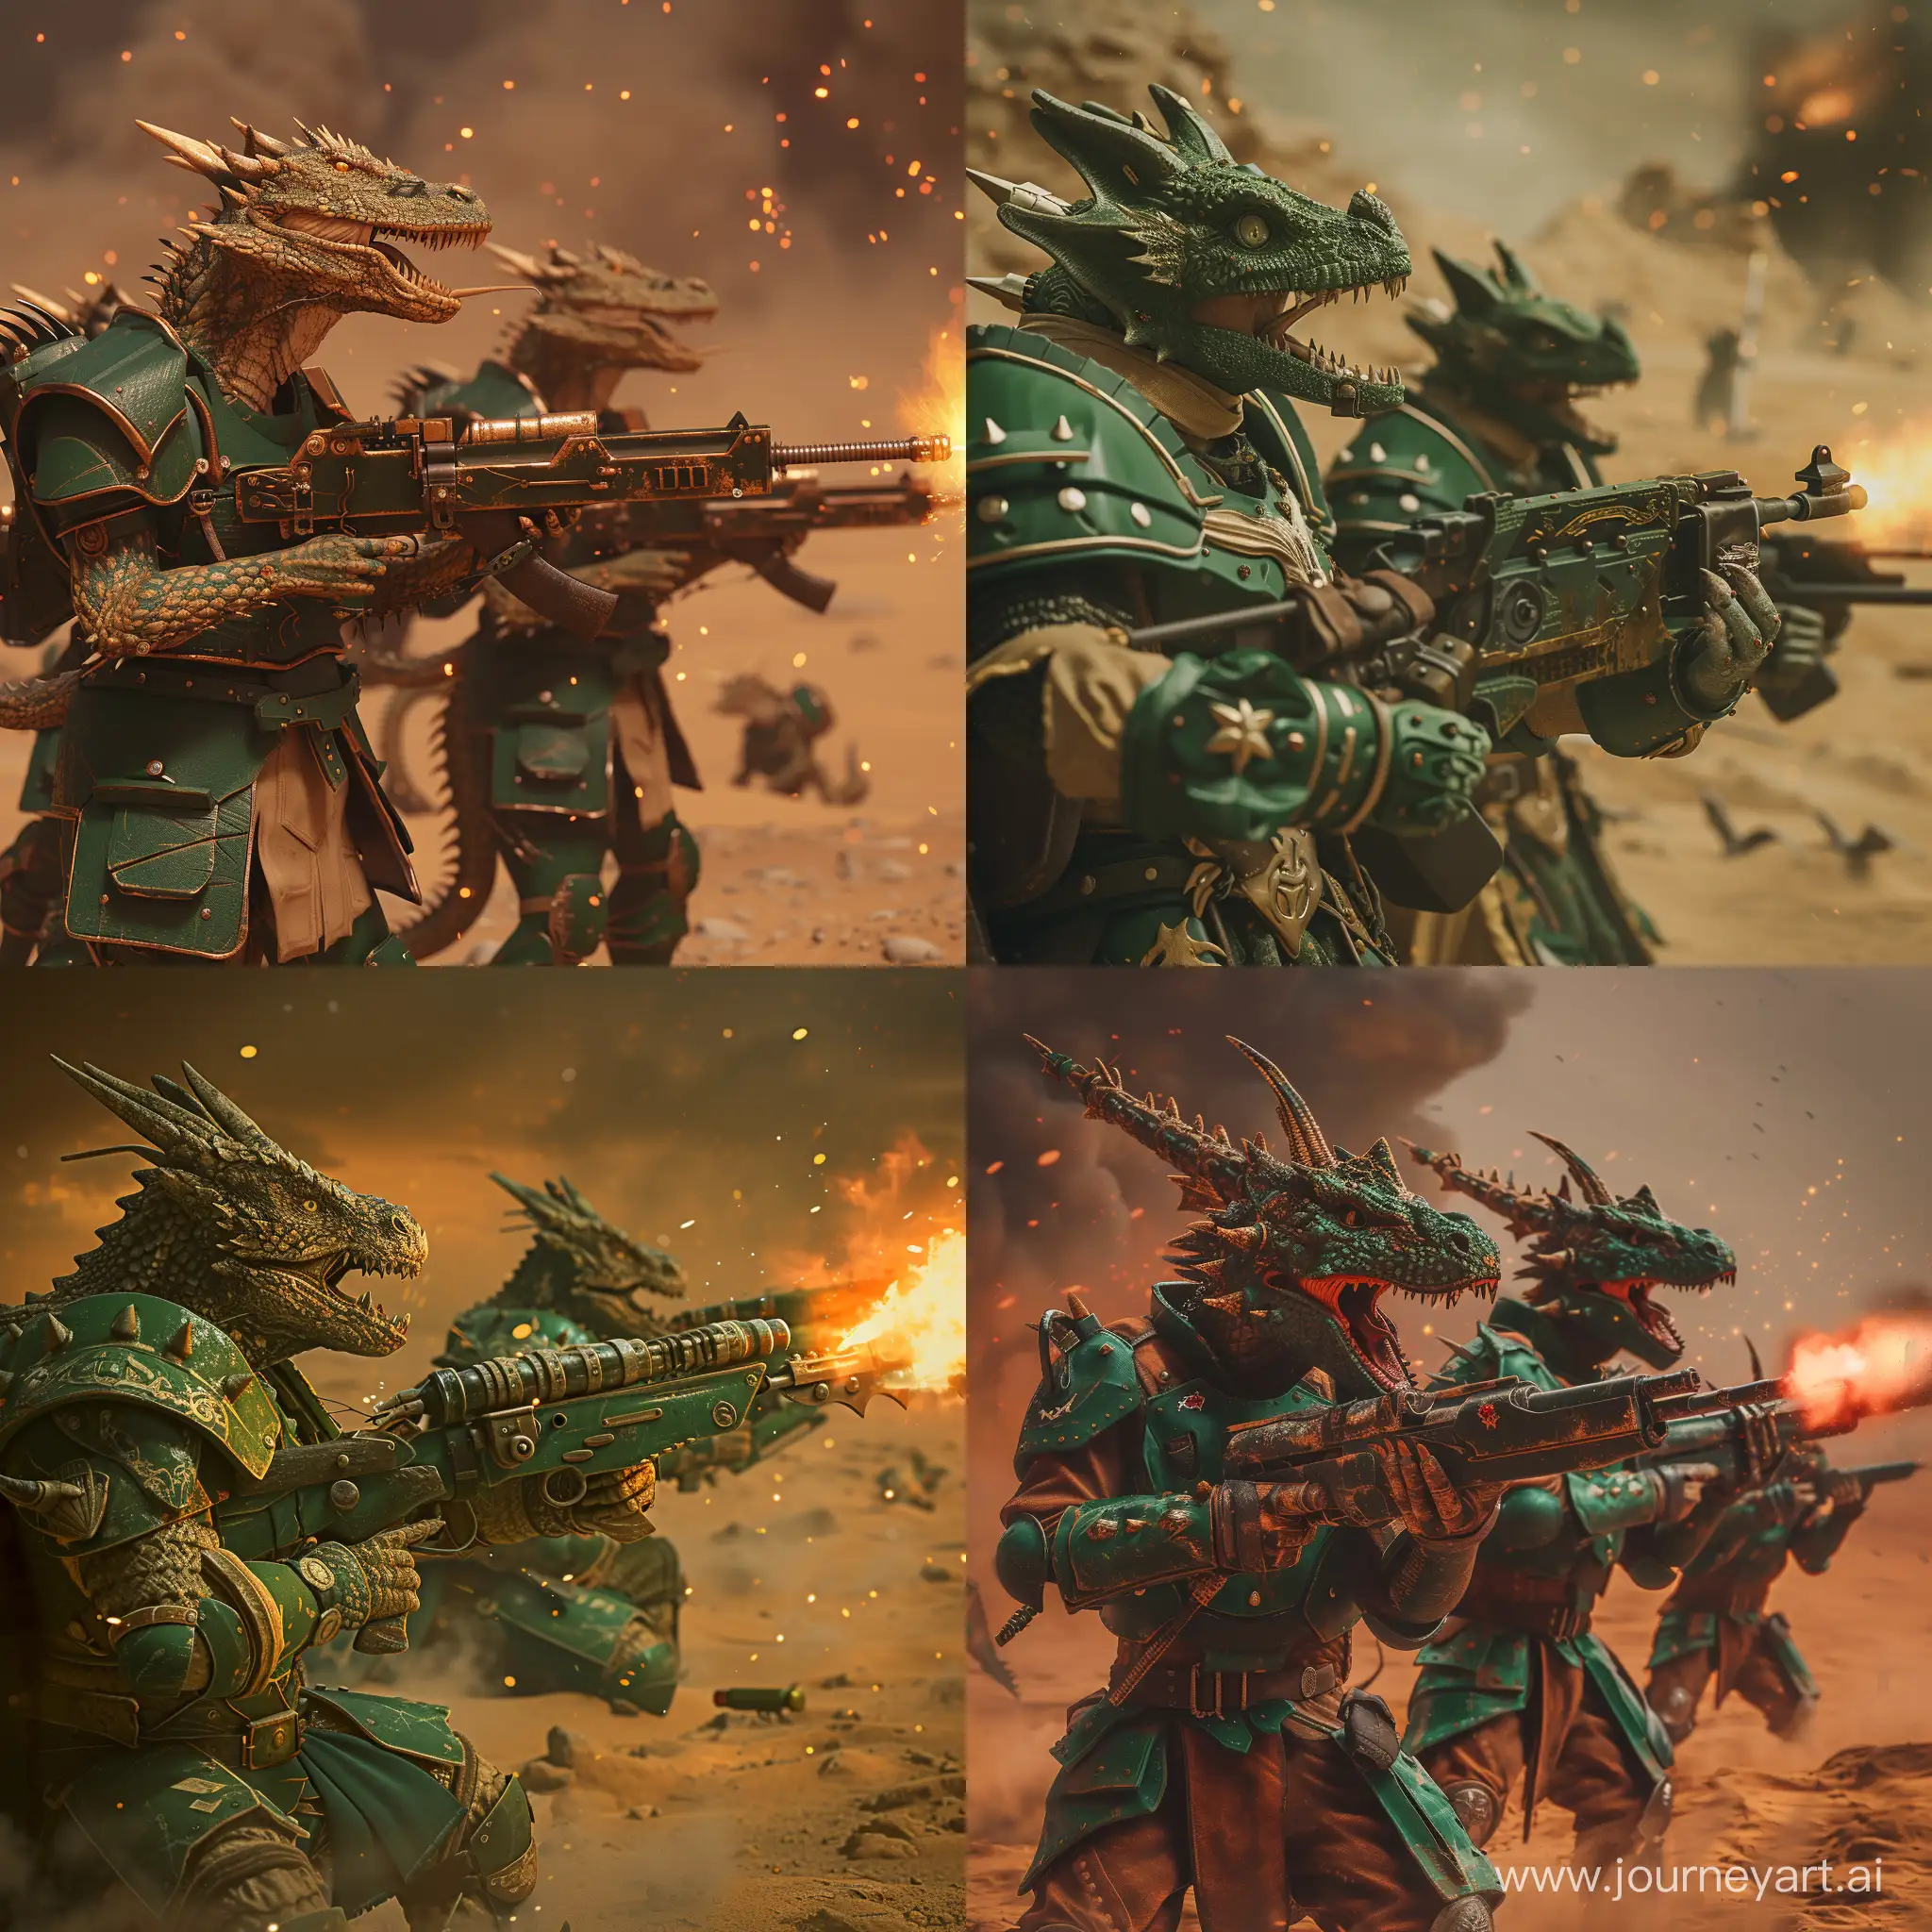 DragonHeaded-Lizard-Warriors-in-Green-Armor-Battle-Demon-of-Fire-in-Desert-Sandstorm